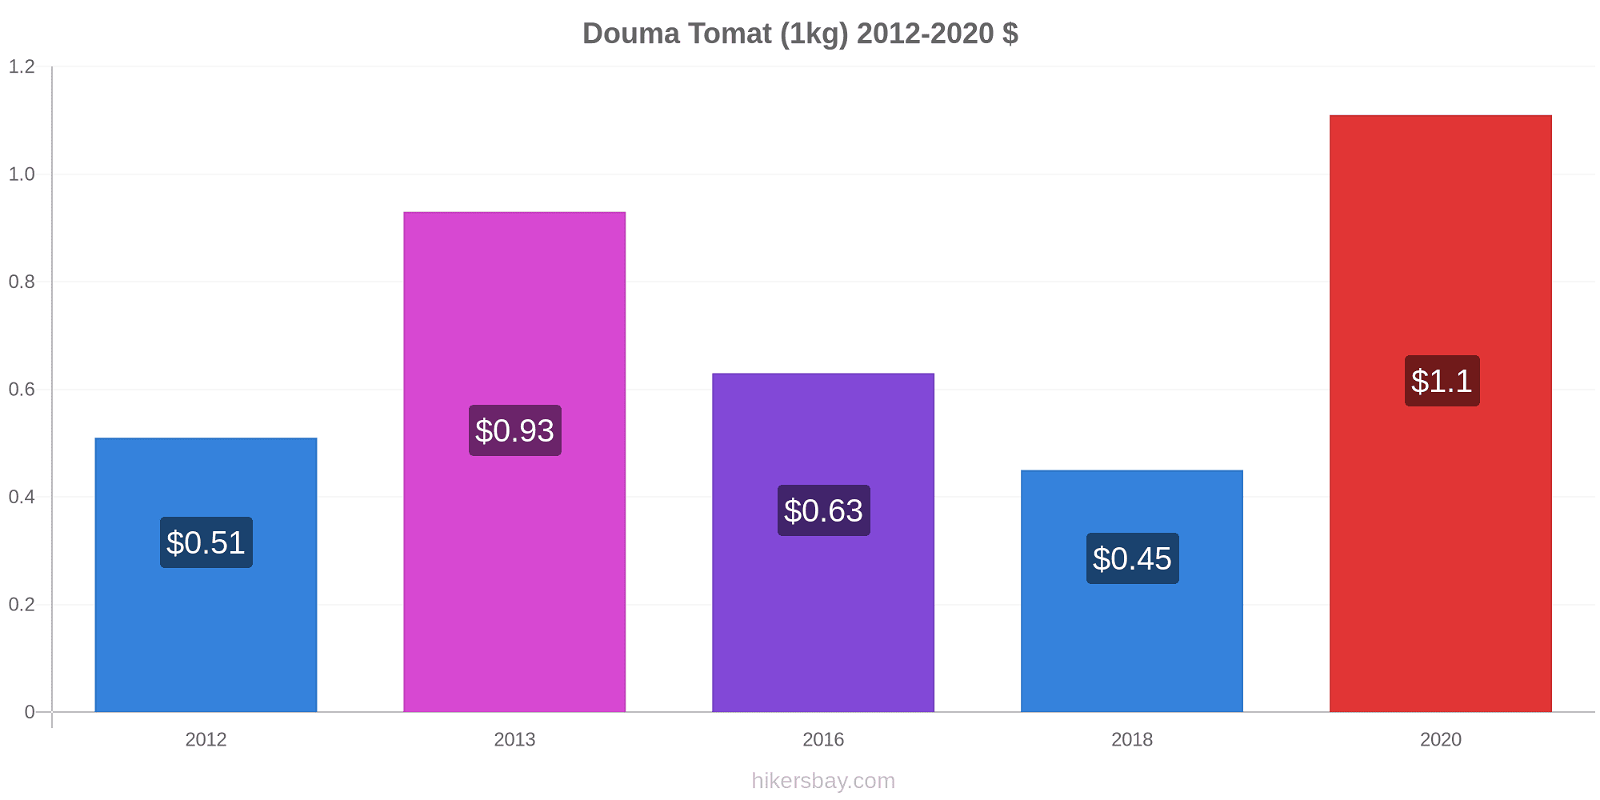 Douma prisændringer Tomat (1kg) hikersbay.com